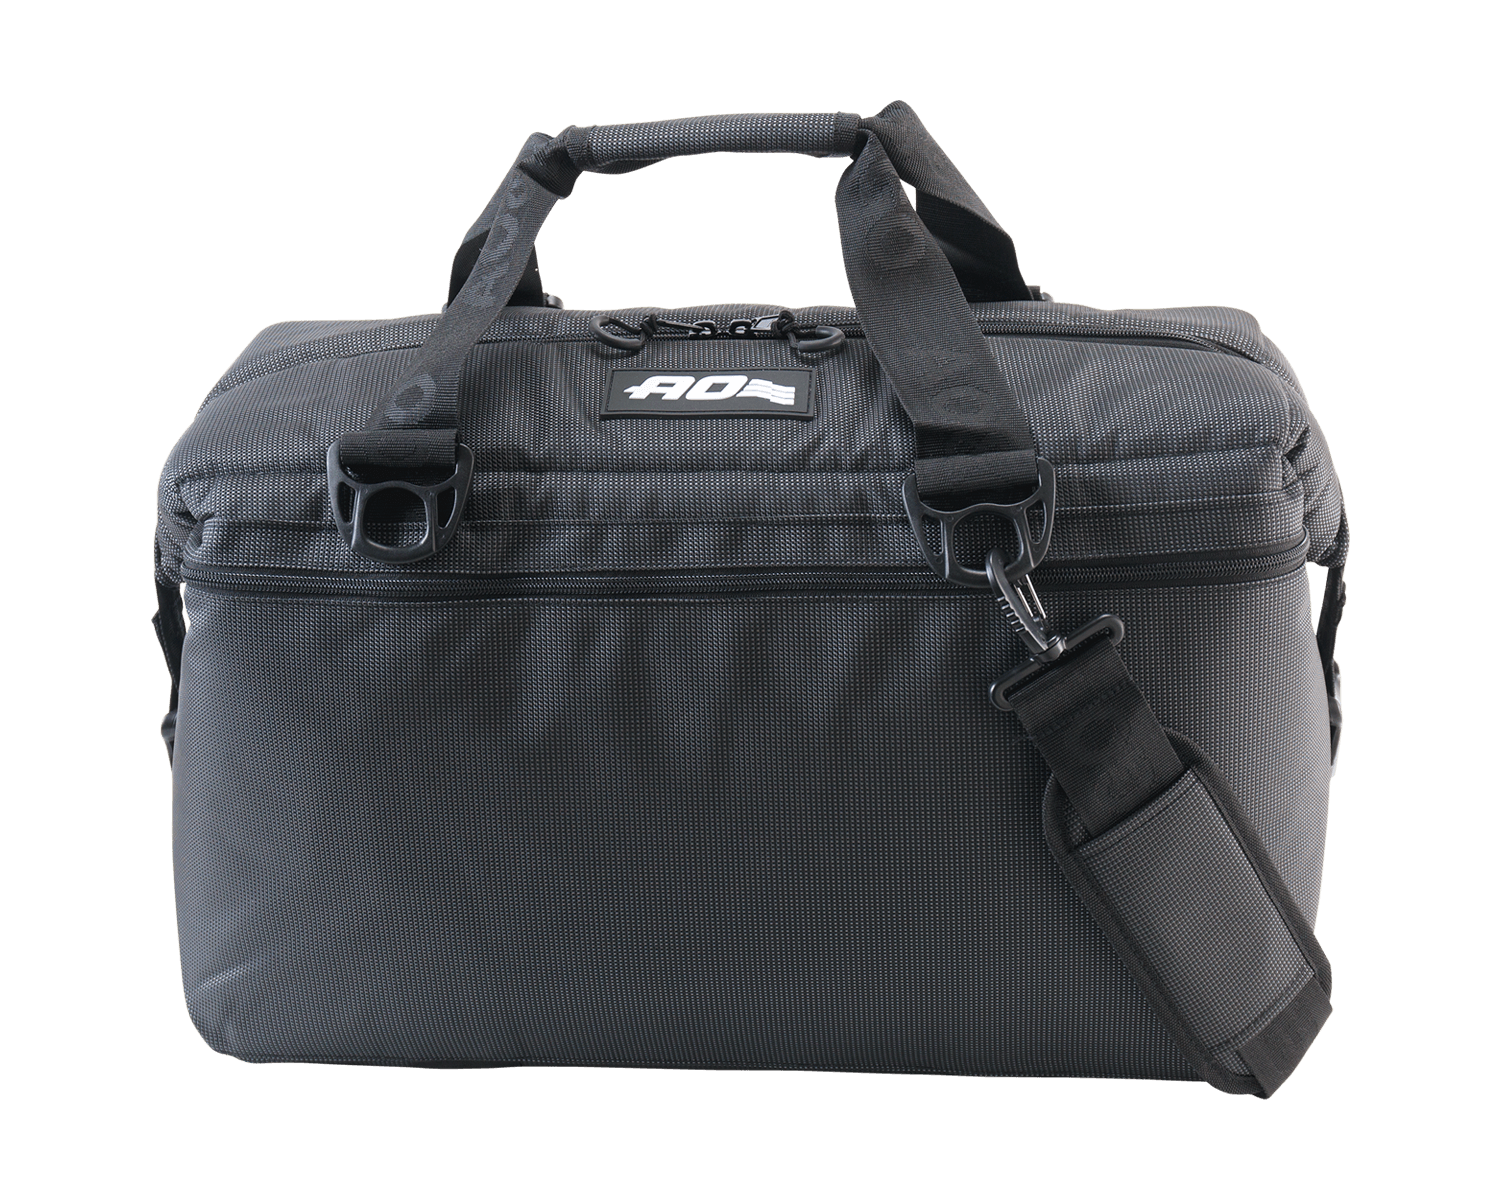 Sportsman Series 24 Pack Cooler - 24 Pack / Black/Charcoal